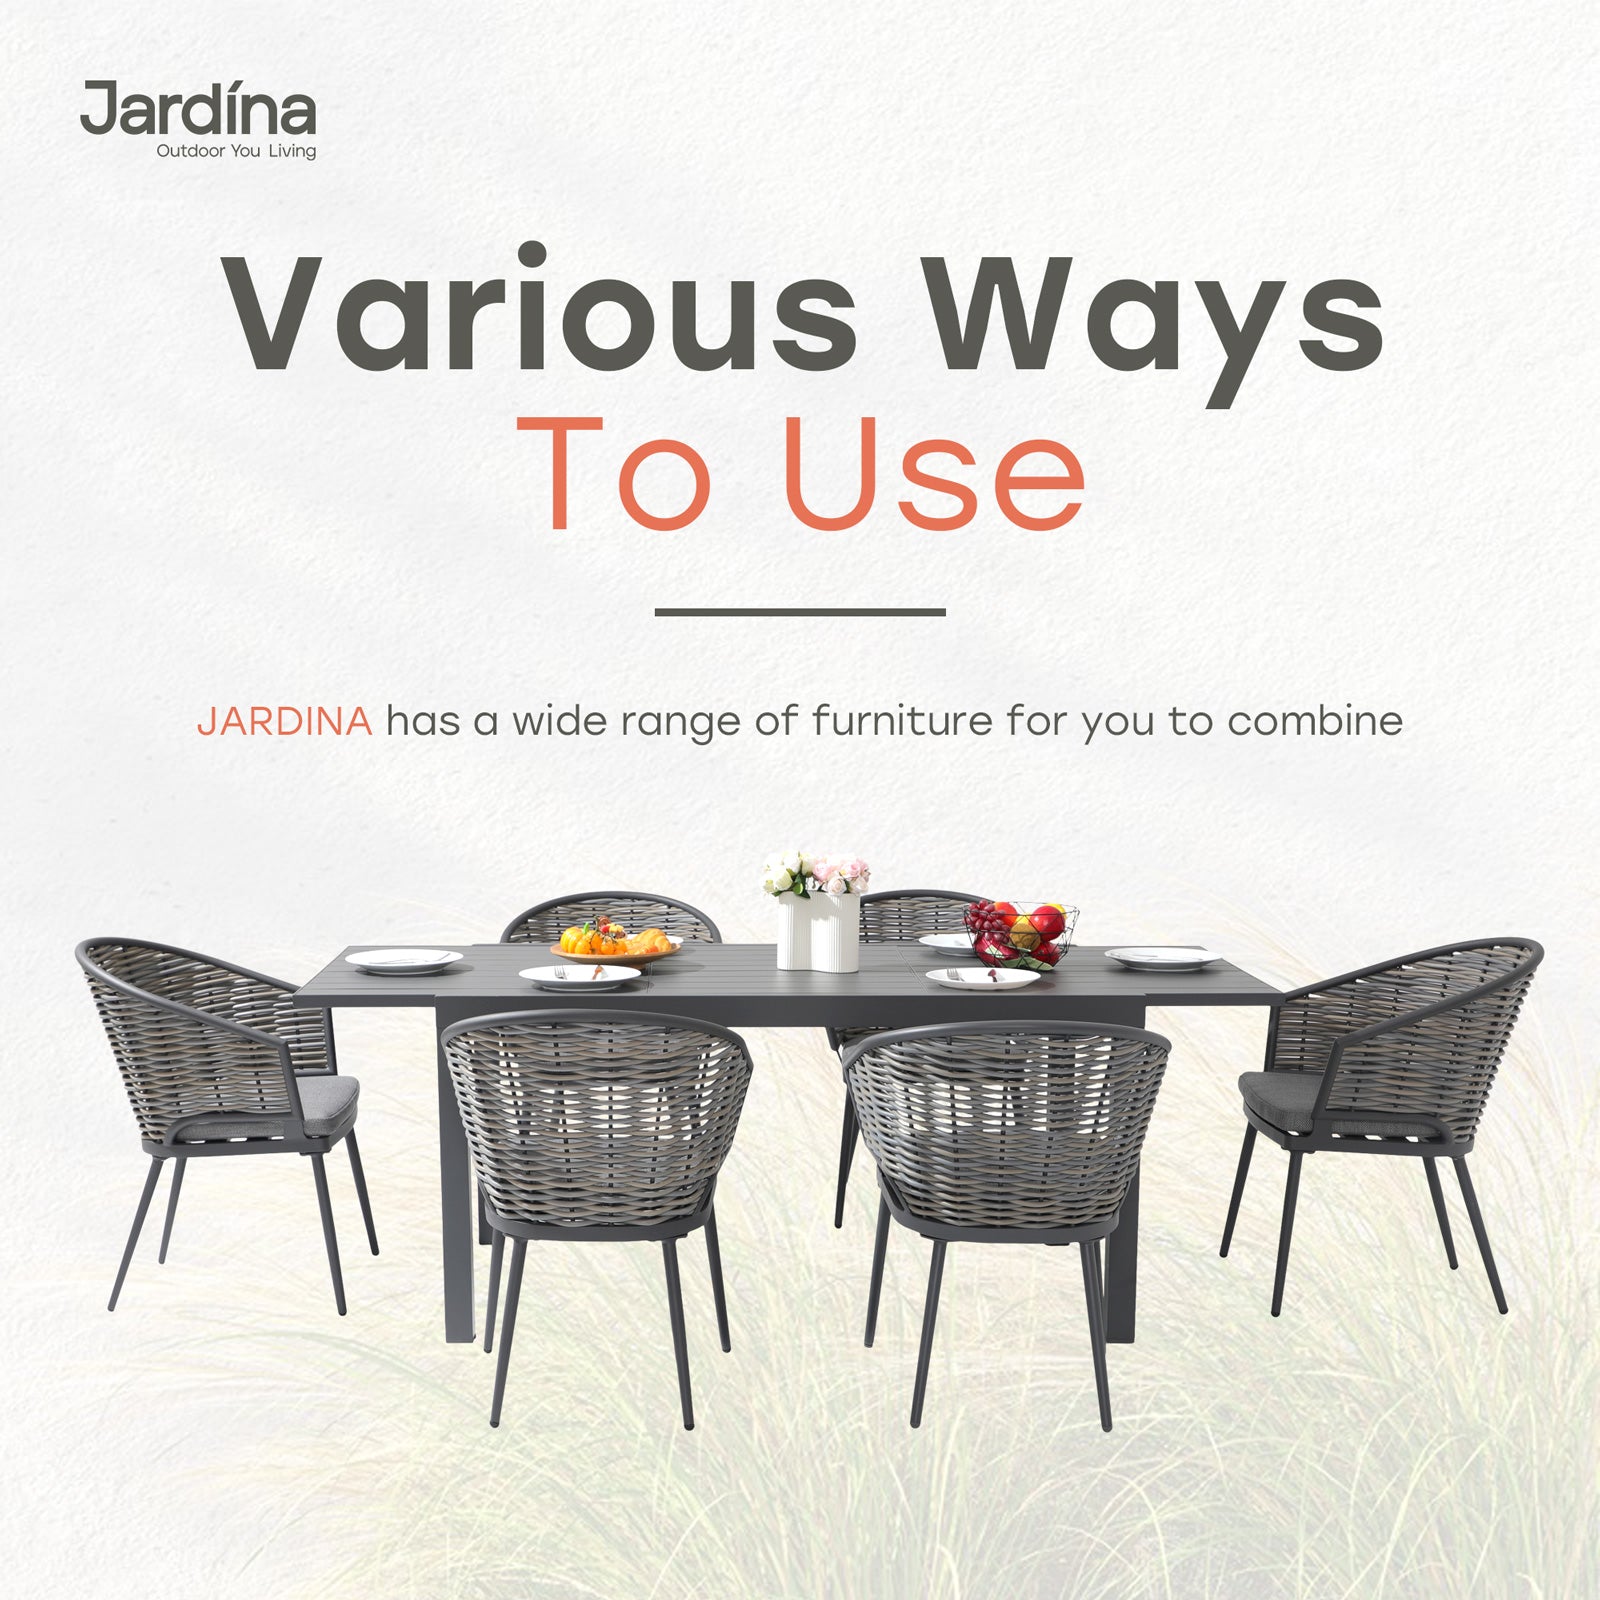 Jardina's grey wicker outdoor dining set